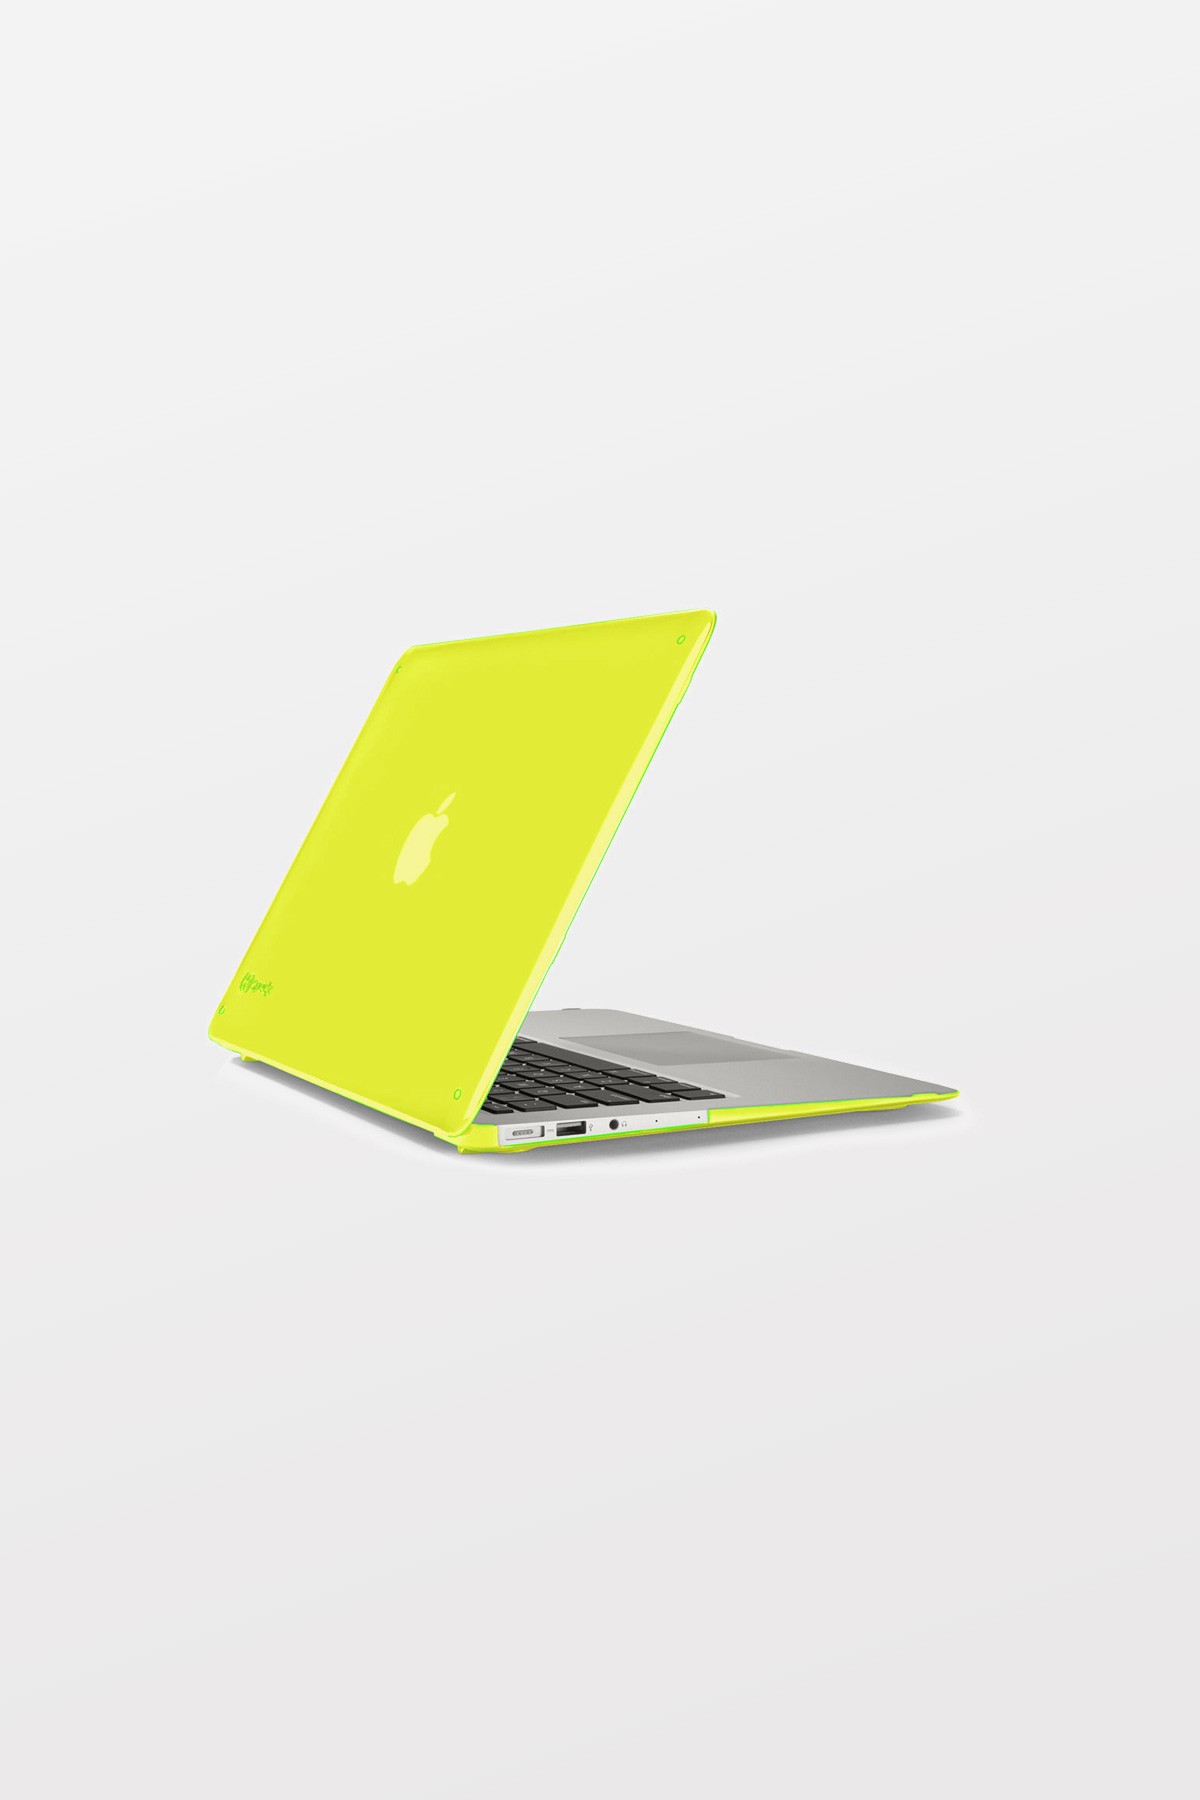 Speck MacBook Air 11-inch SeeThru Lightning Yellow